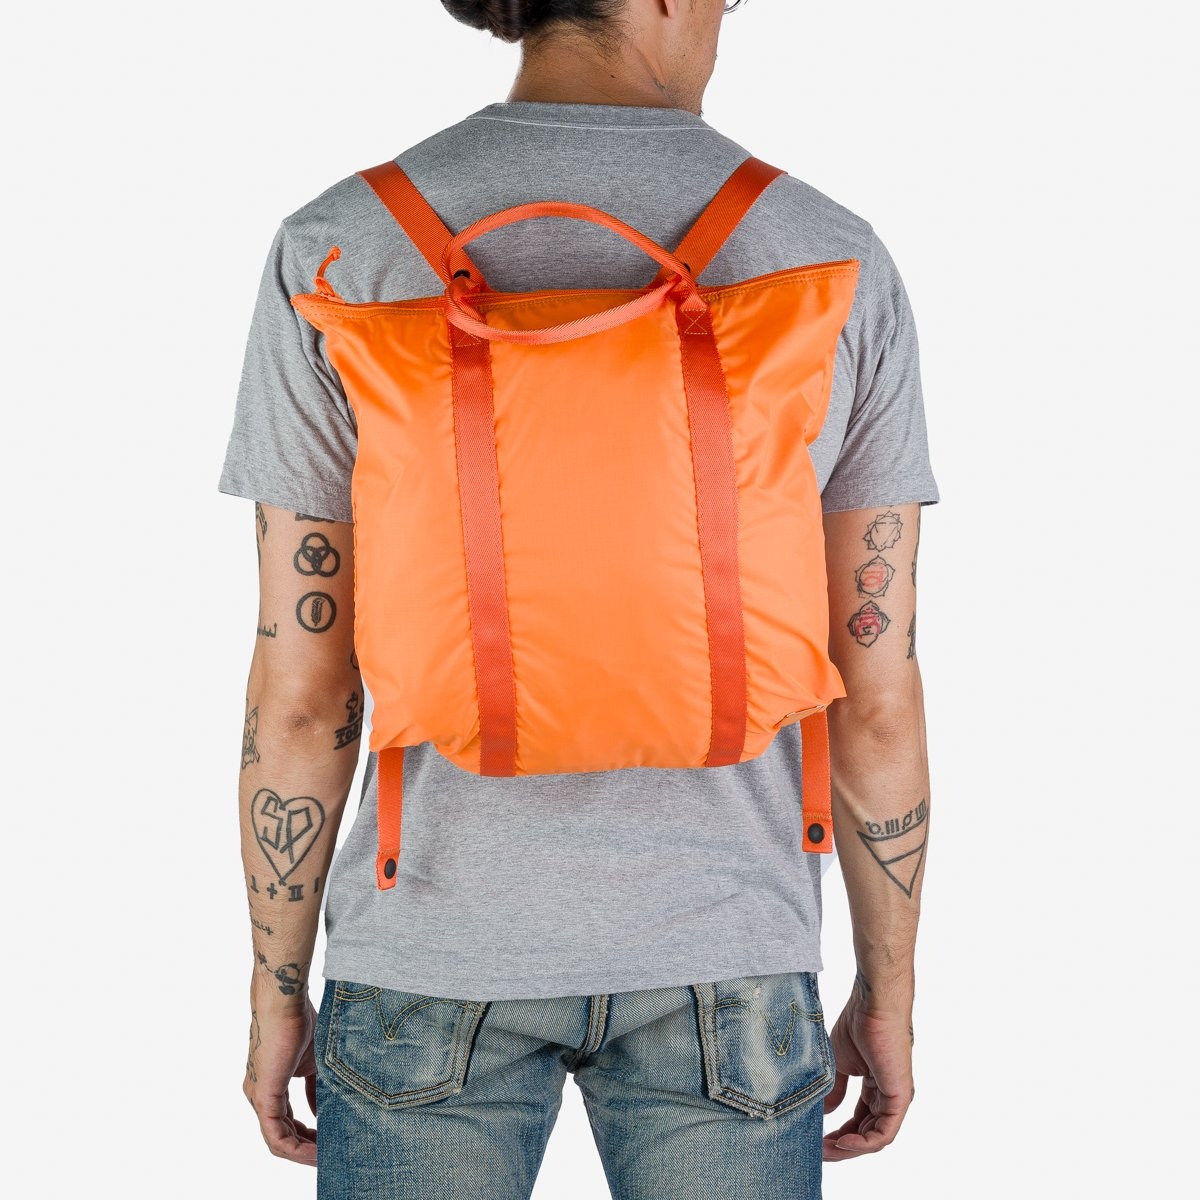 POR-FLEX-TOTE-ORA Porter - Yoshida & Co. - Flex 2Way Tote Bag - Orange - 3